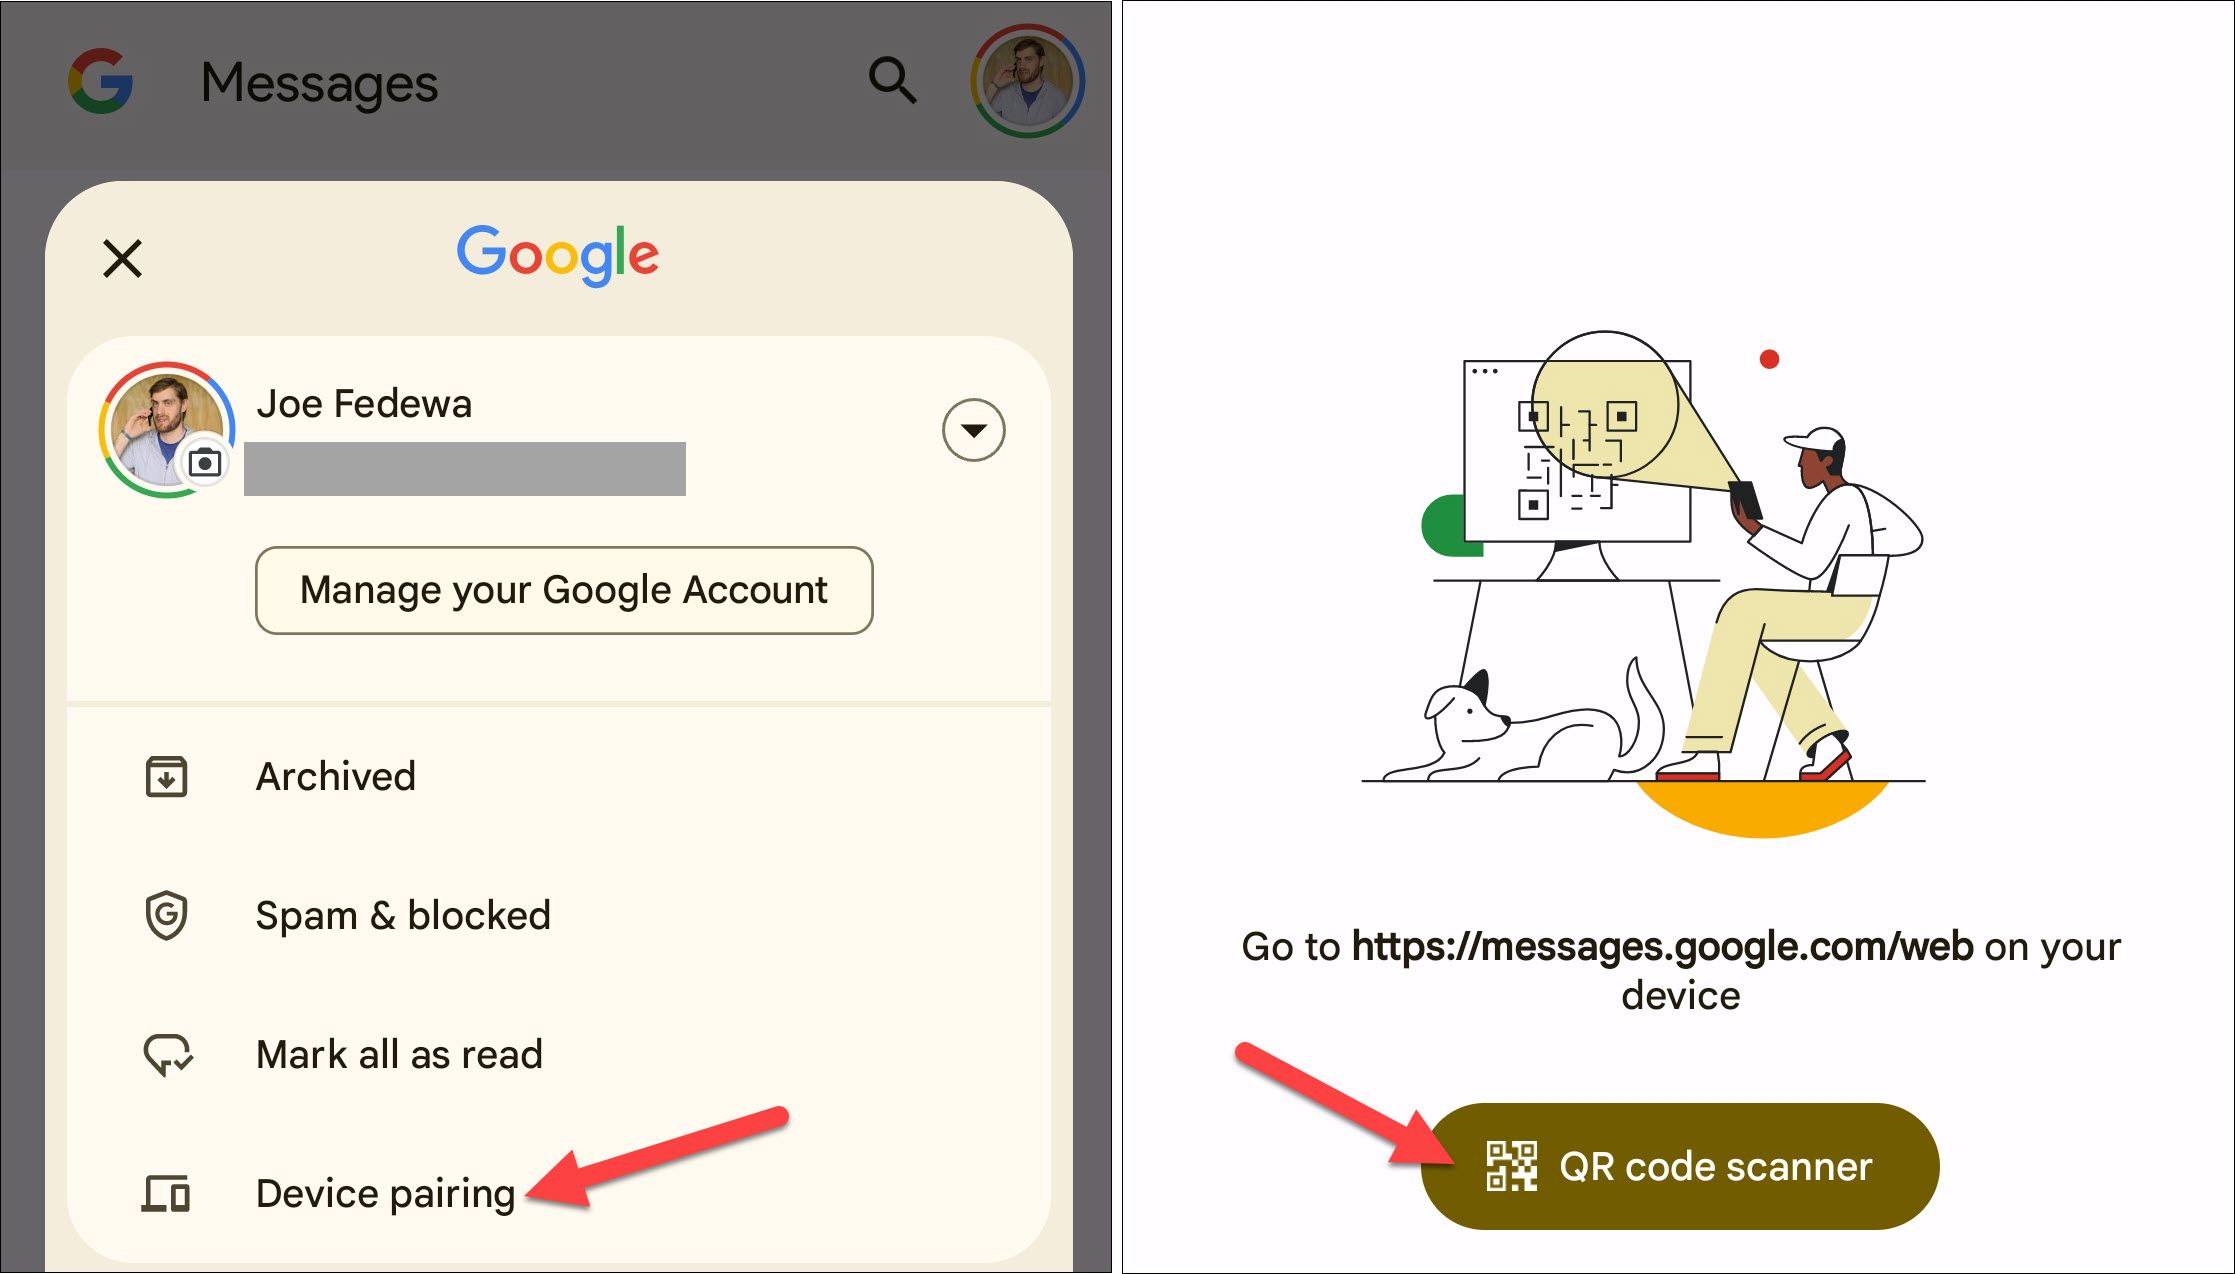 Messages menu and QR code scanner button.